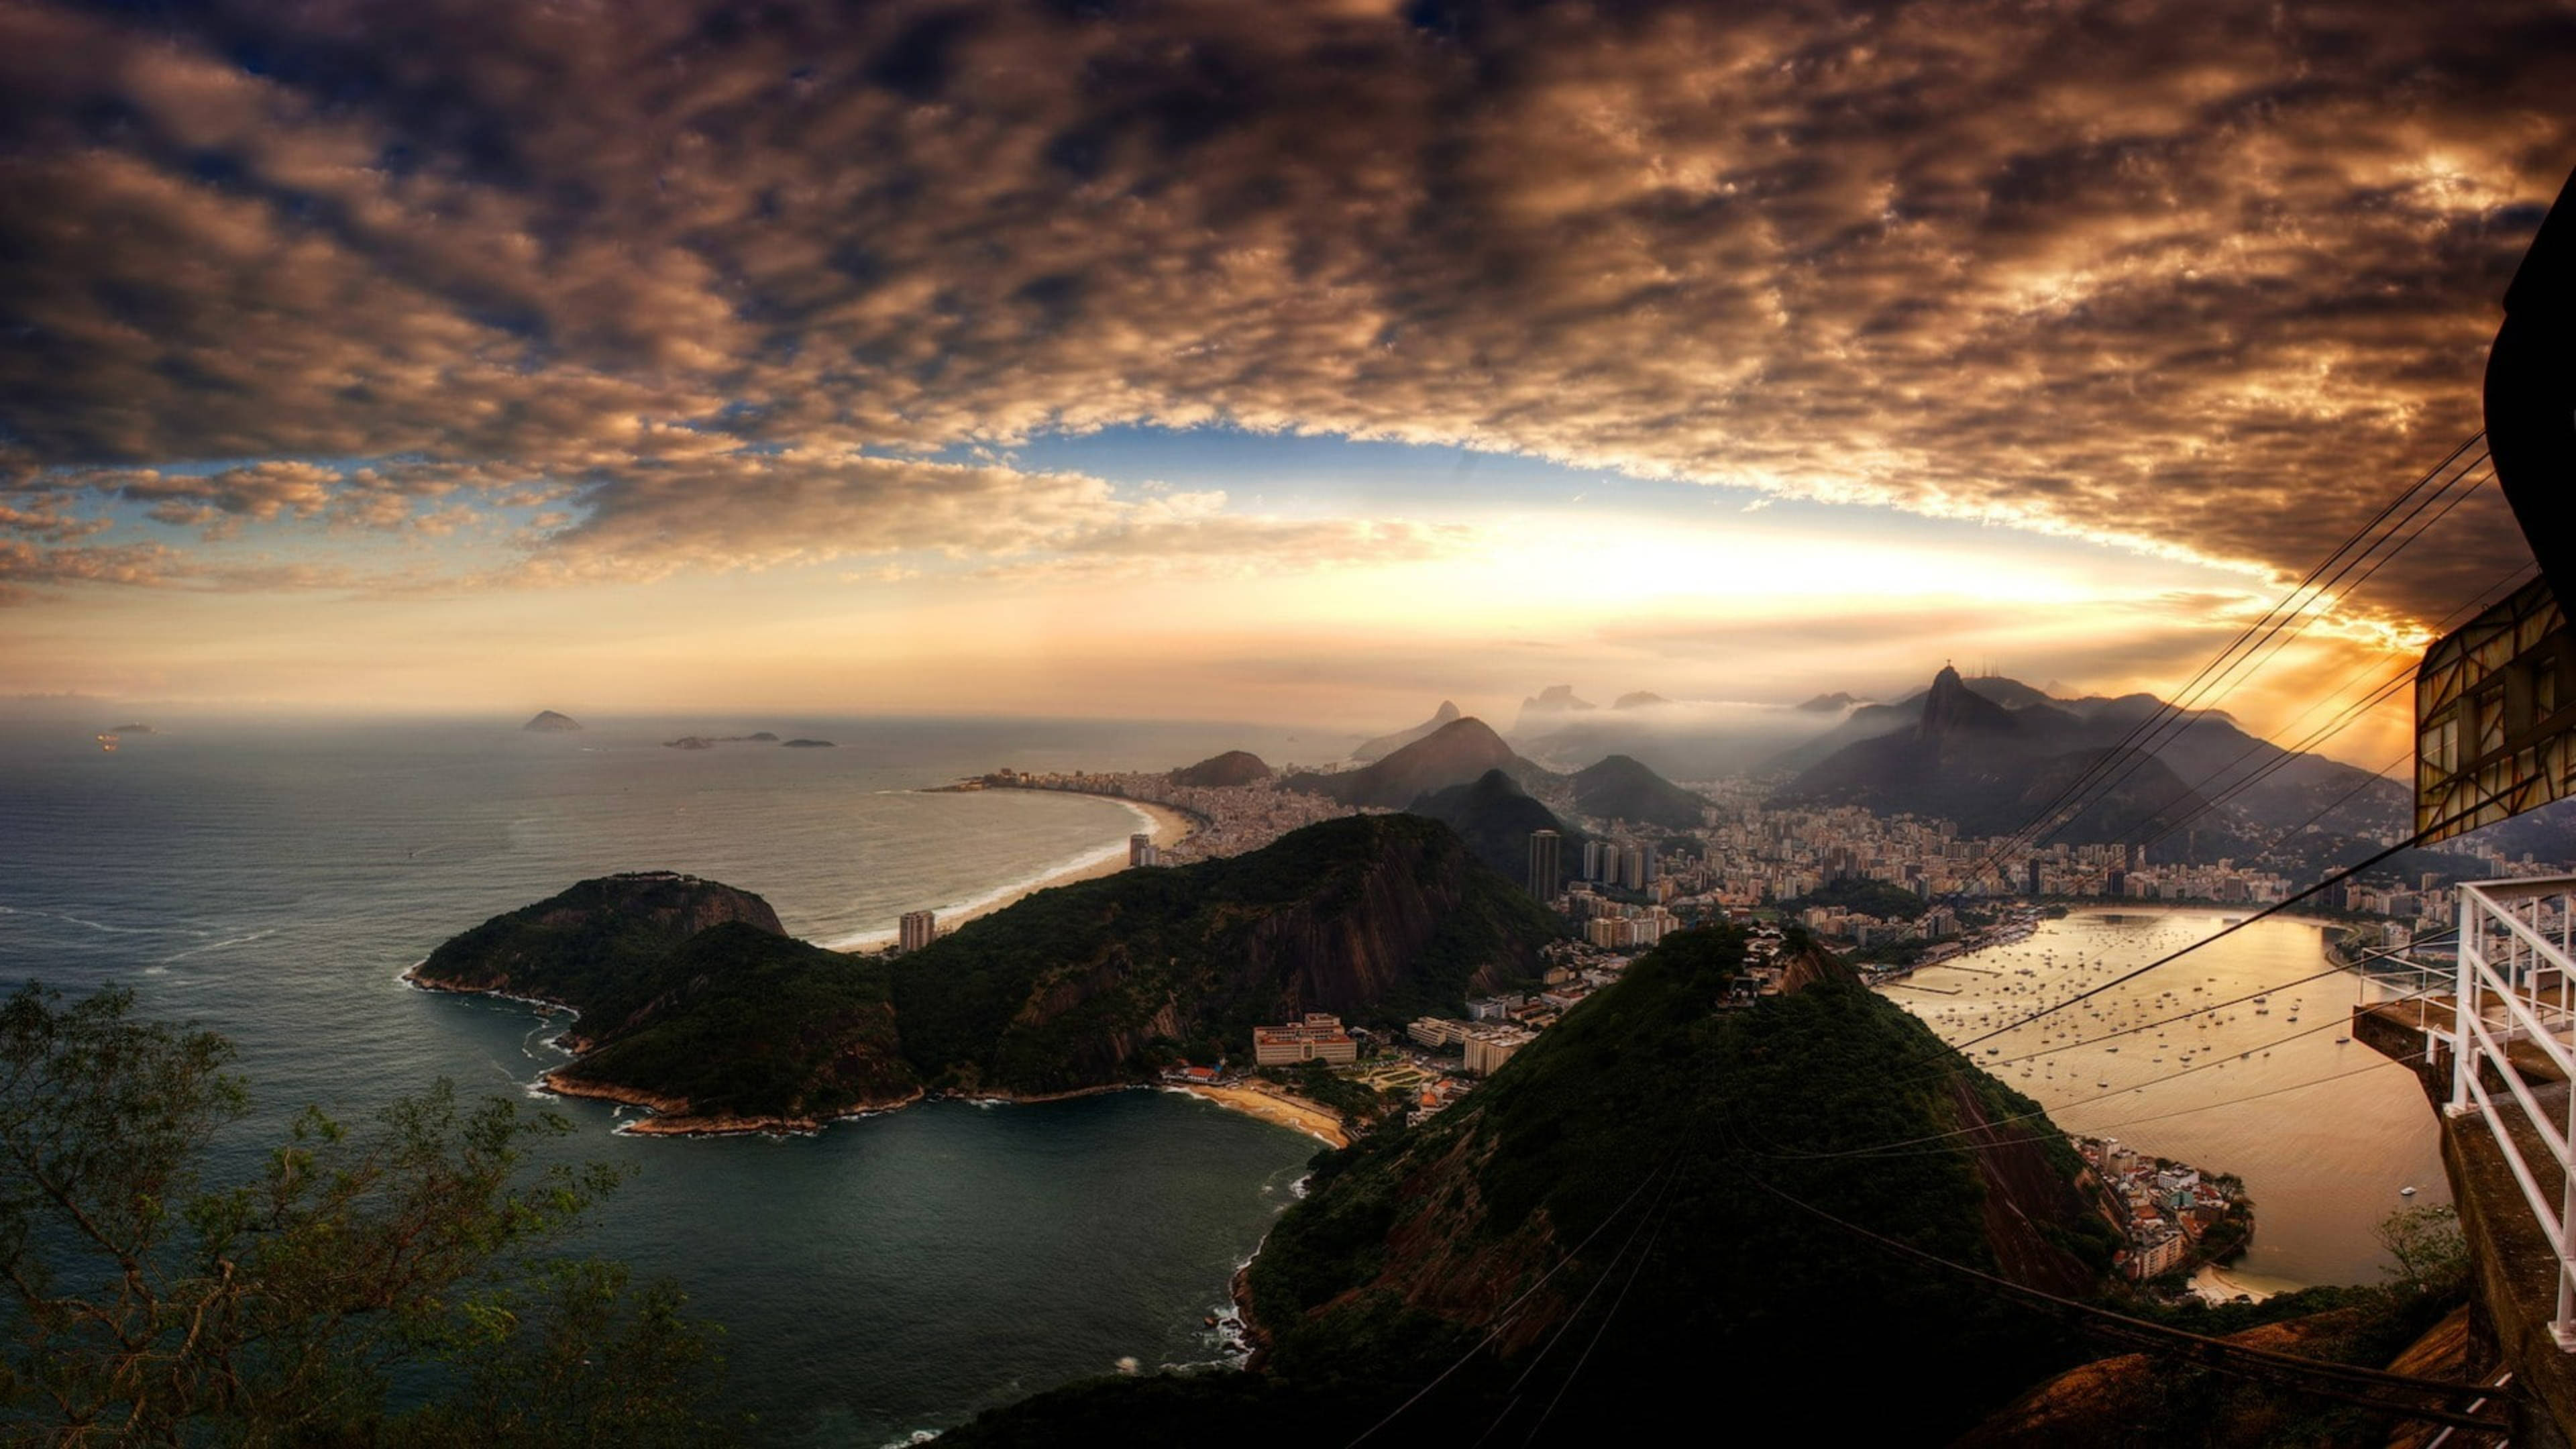 Широкие обои на стол. Пейзажи Рио де Жанейро. Бразилия Рио де Жанейро. Бразилия Рио де Жанейро море. Вид на Рио де Жанейро с горы.